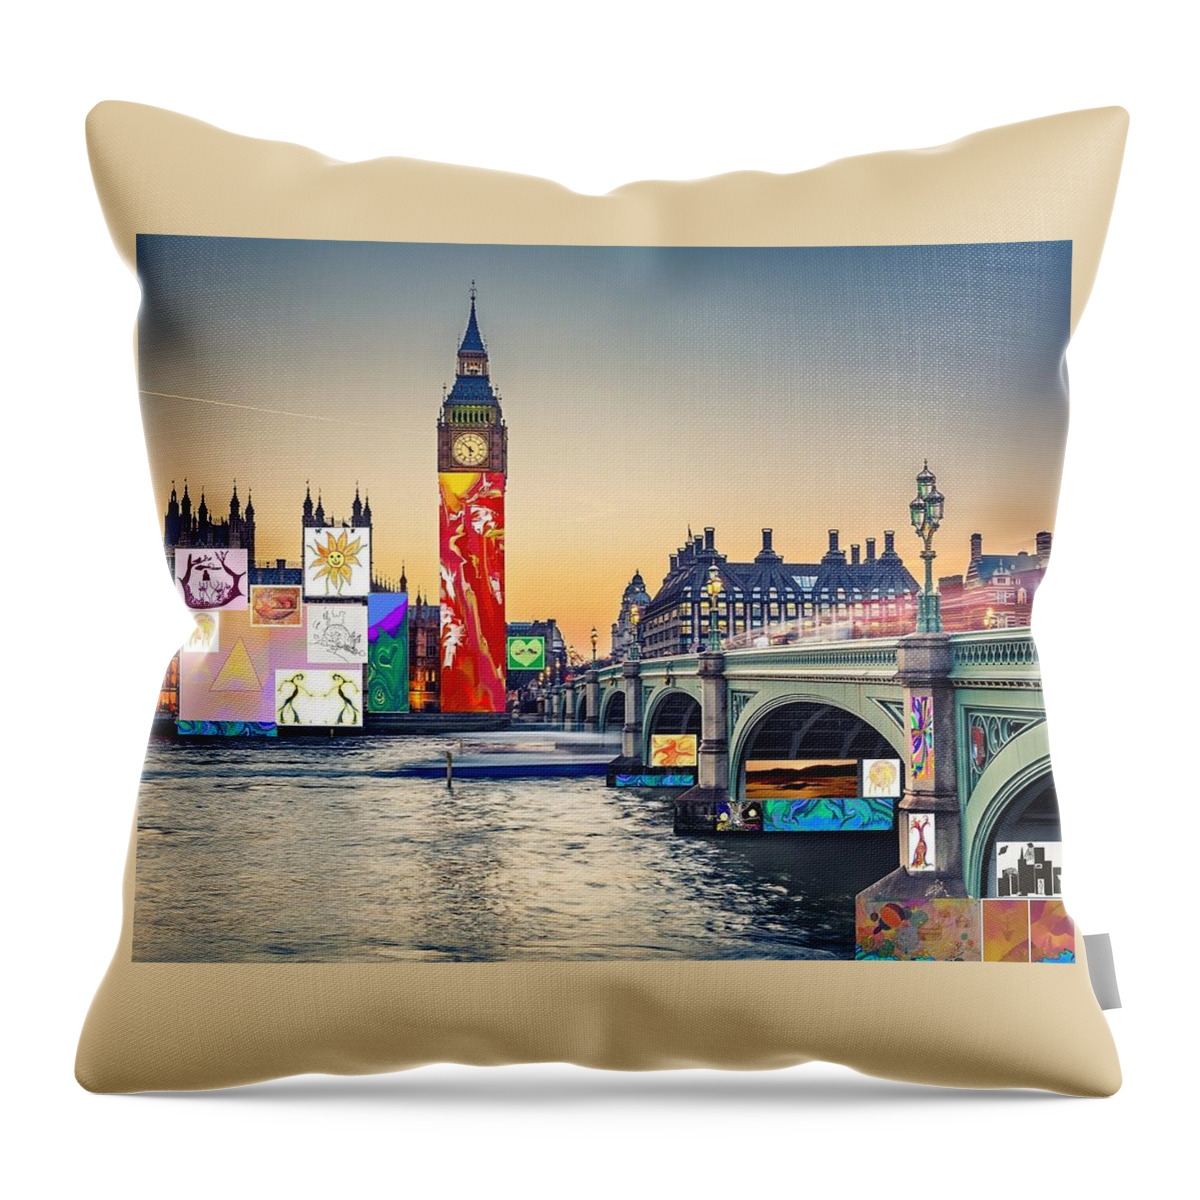 London Throw Pillow featuring the digital art London Skyline Collage 3 inc Big Ben, Westminster by Julia Woodman